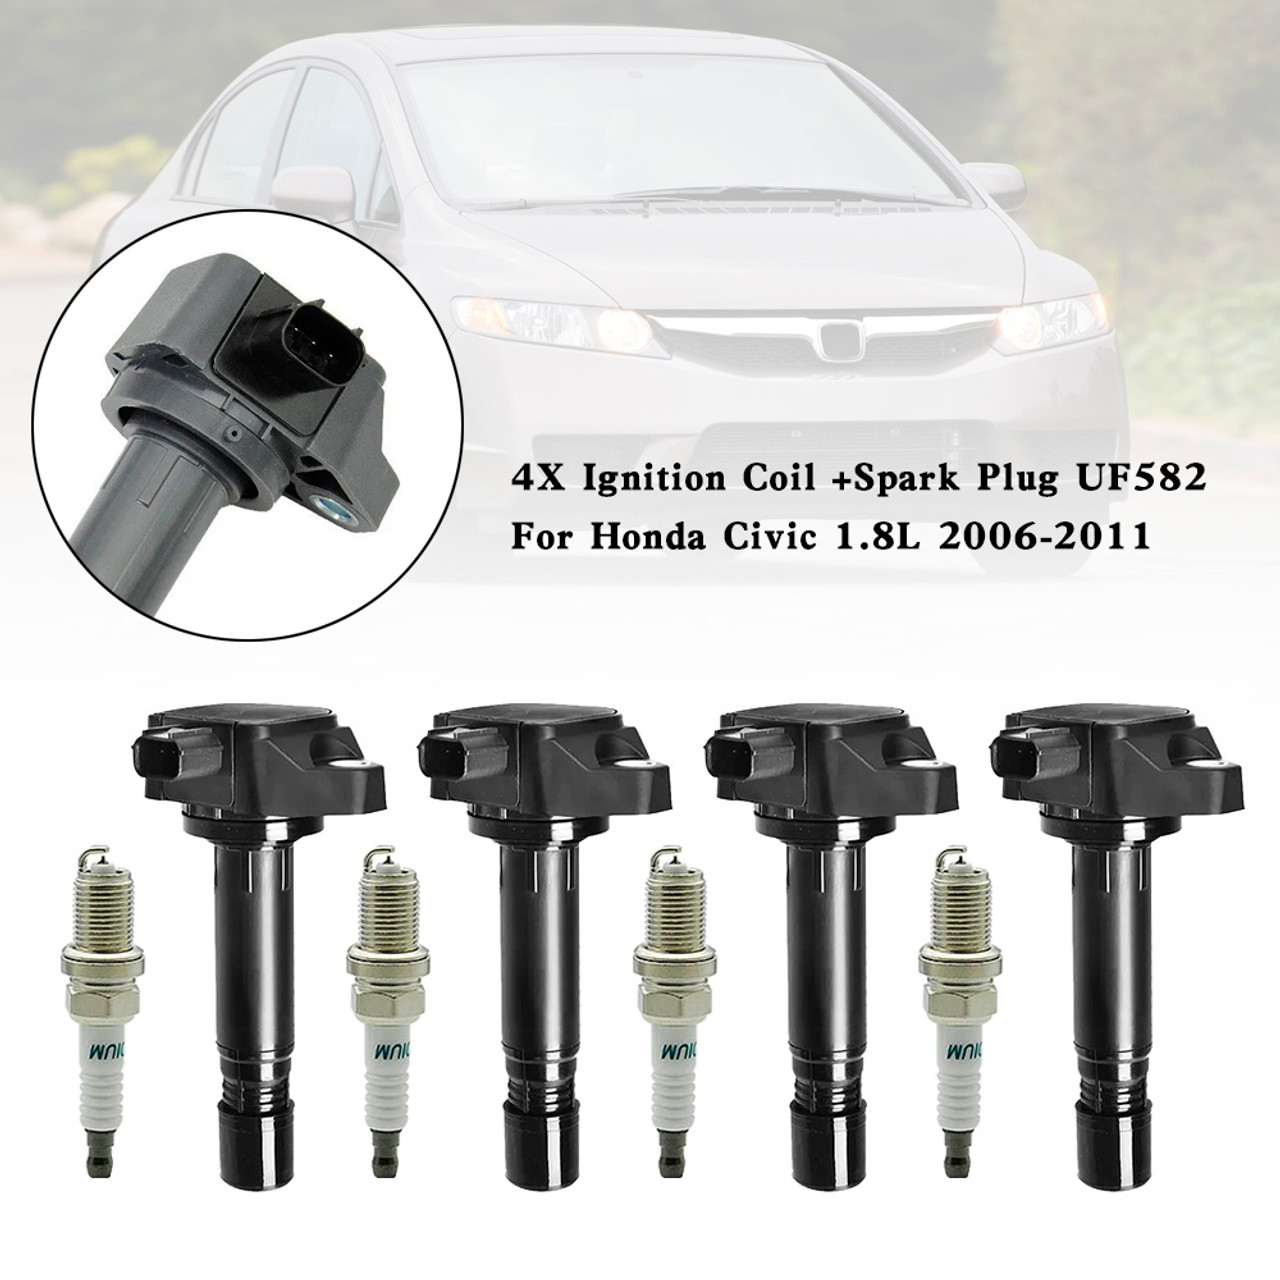 4X Ignition Coil +Spark Plug UF582 For Honda Civic 1.8L 2006-2011